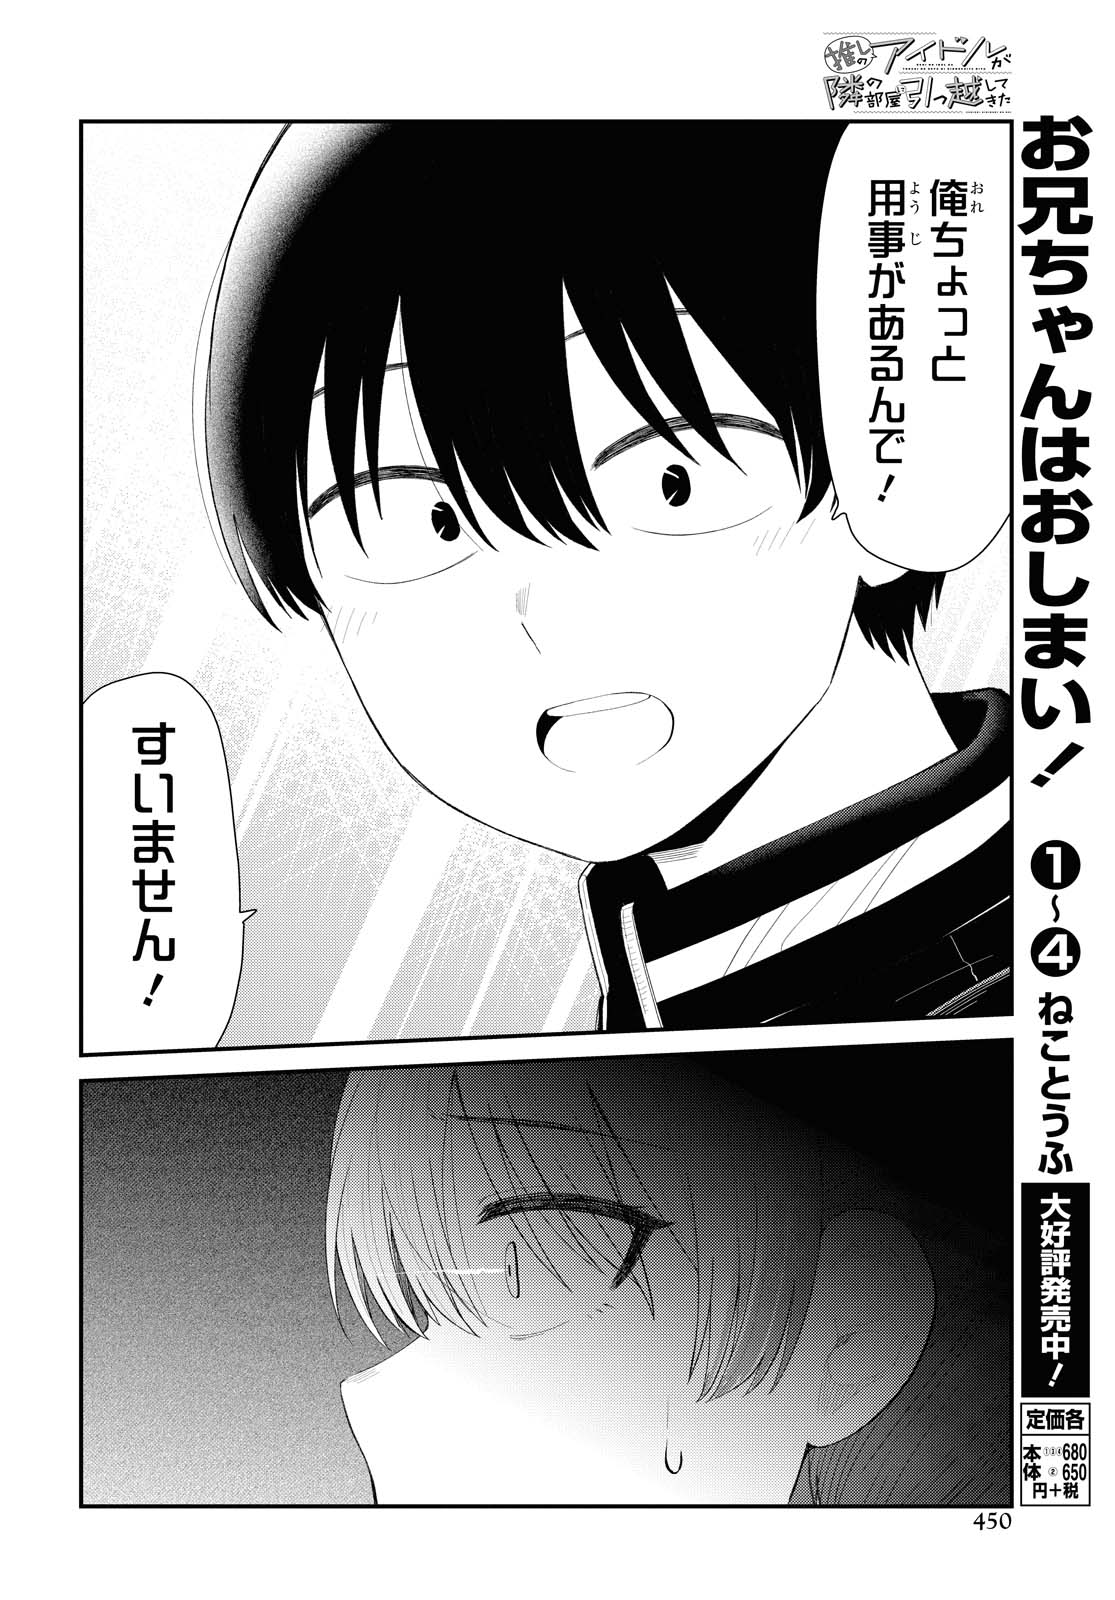 The Romcom Tonari no Idol-san 推しのアイドルが隣の部屋に引っ越してきた 第25話 - Page 4